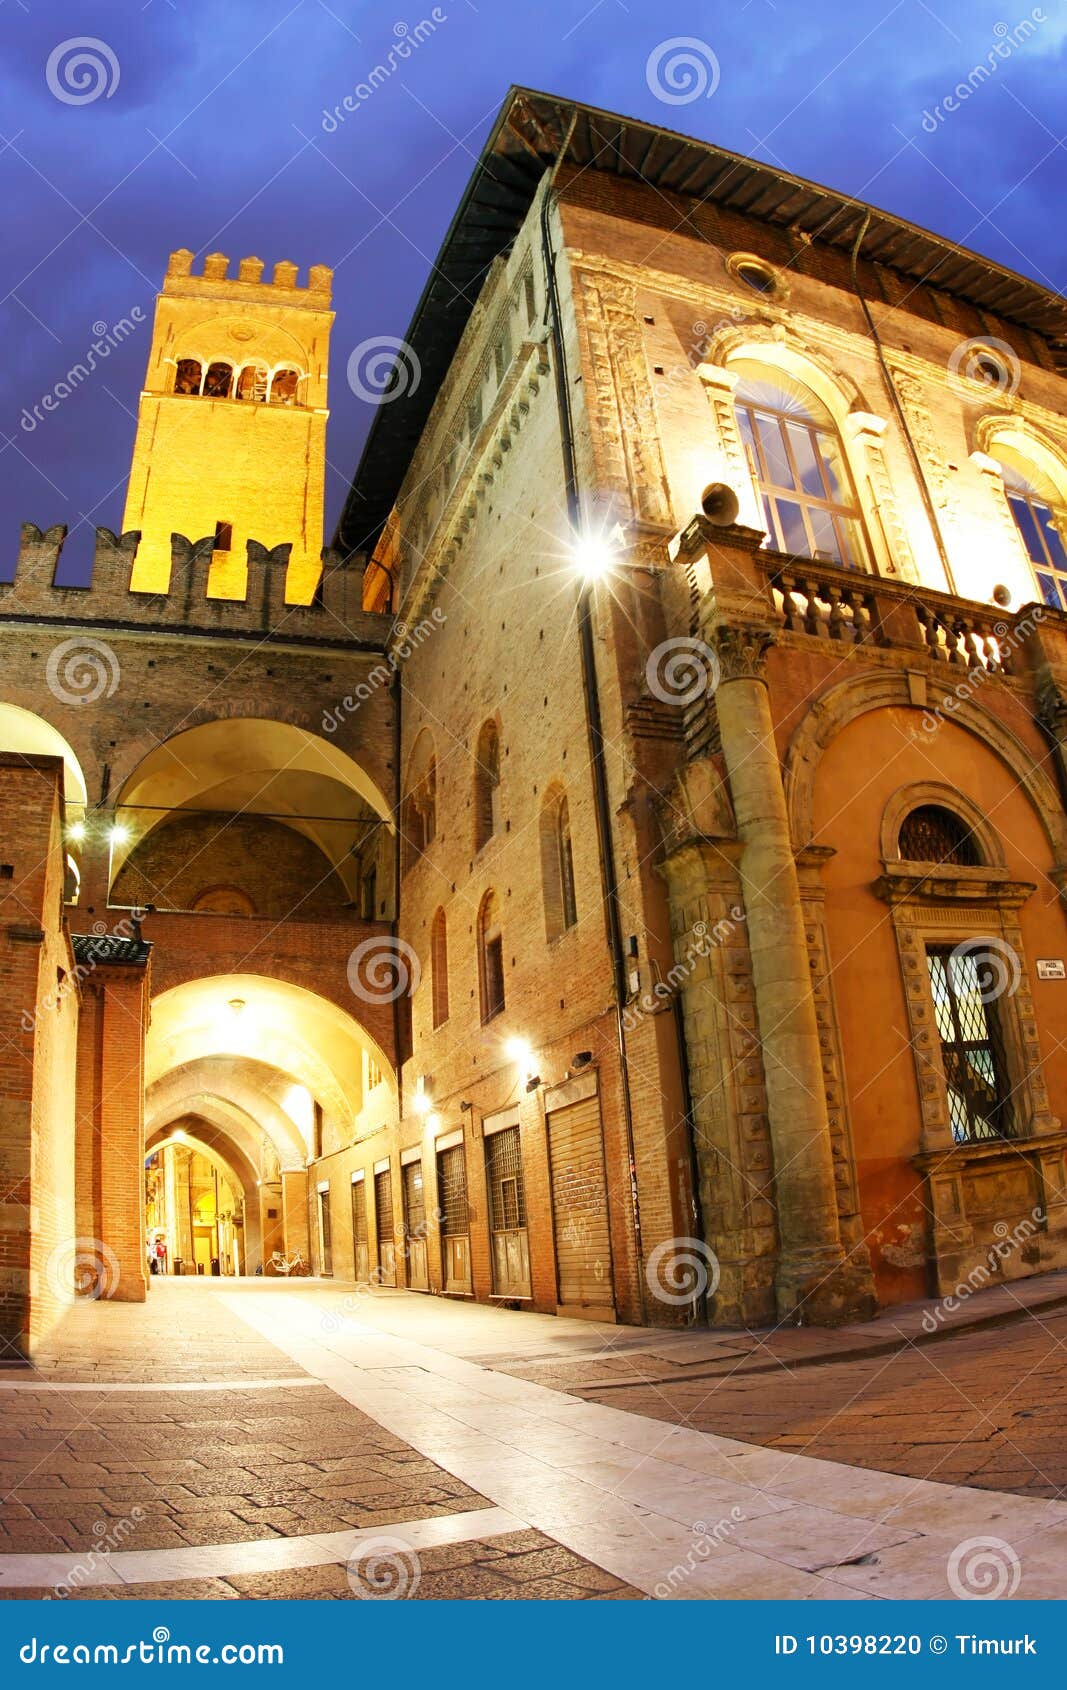 palazzo del podesta at night (bologna, italy)